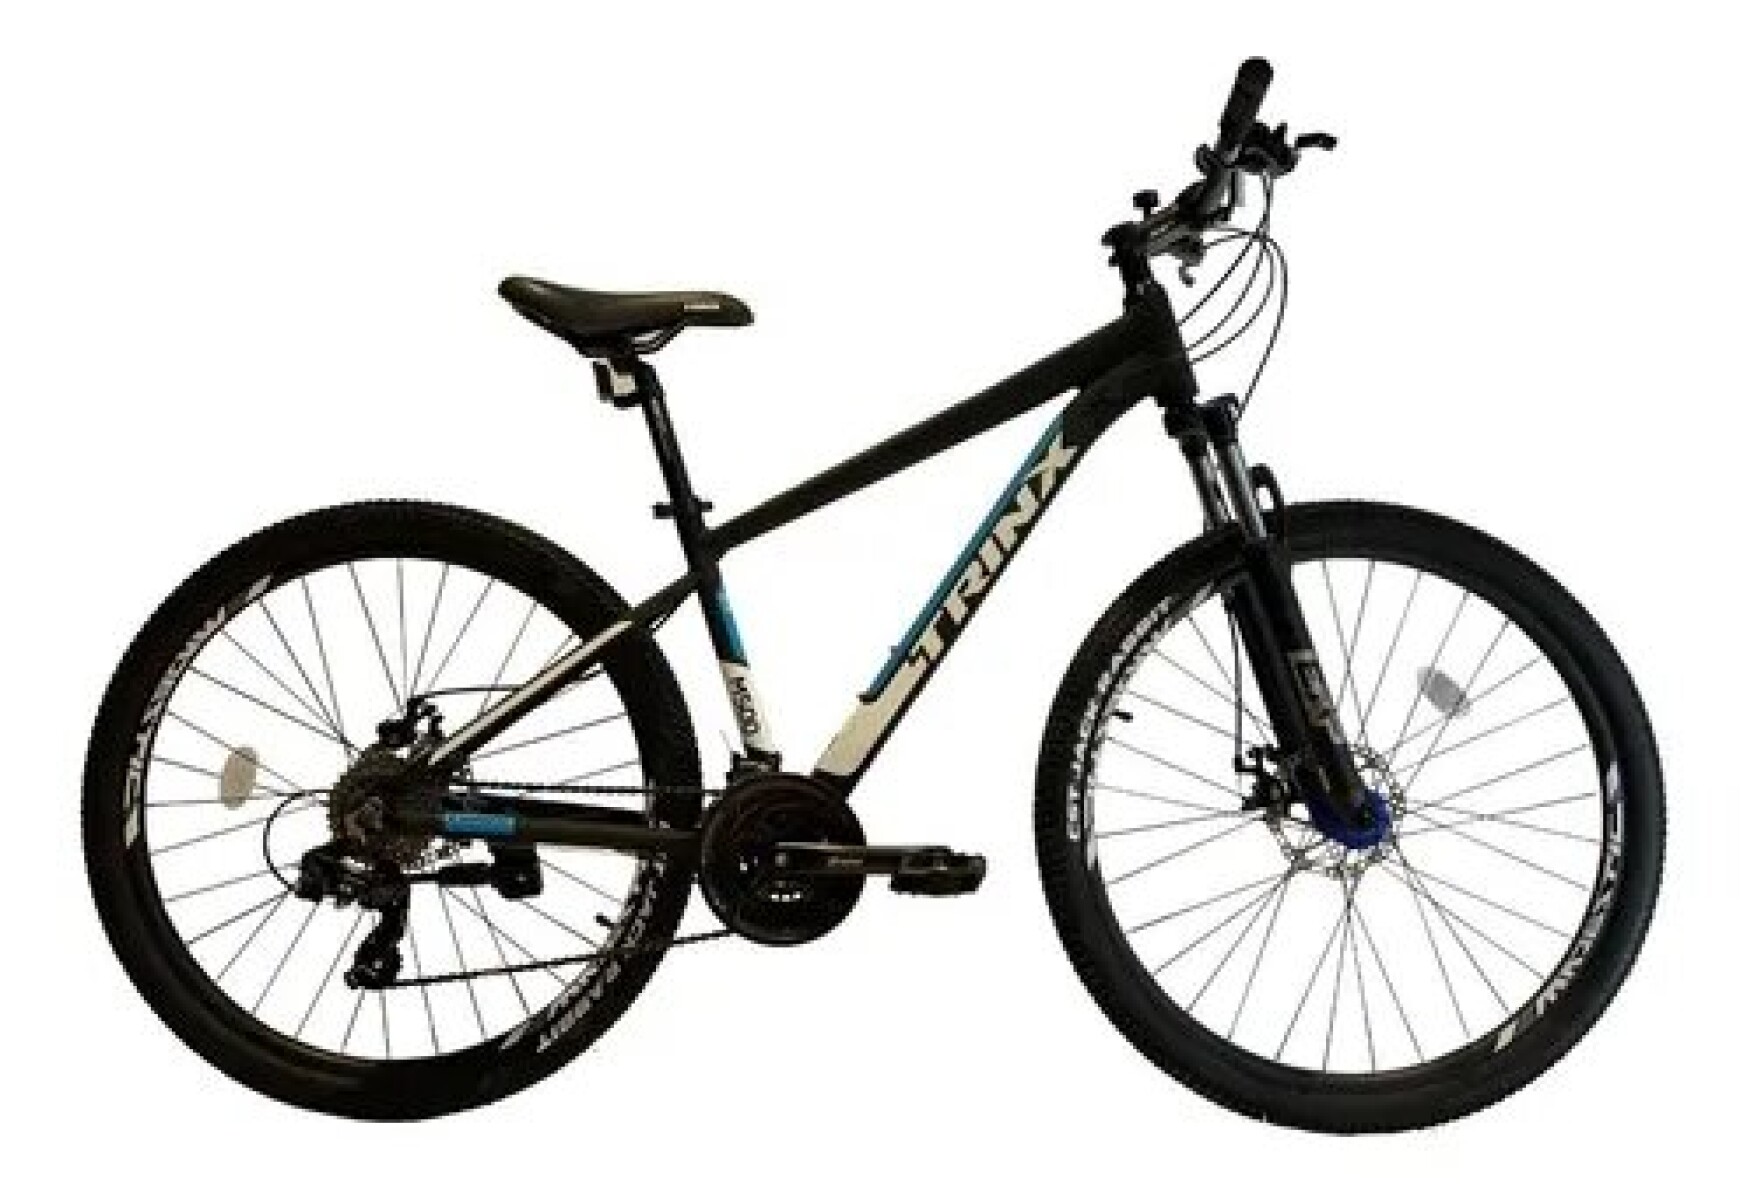 BICICLETA TRINX M500ELITE - NEGRO/BLANCO/AZUL - Bicicleta Trinx M500elite - Negro/blanco/azul 